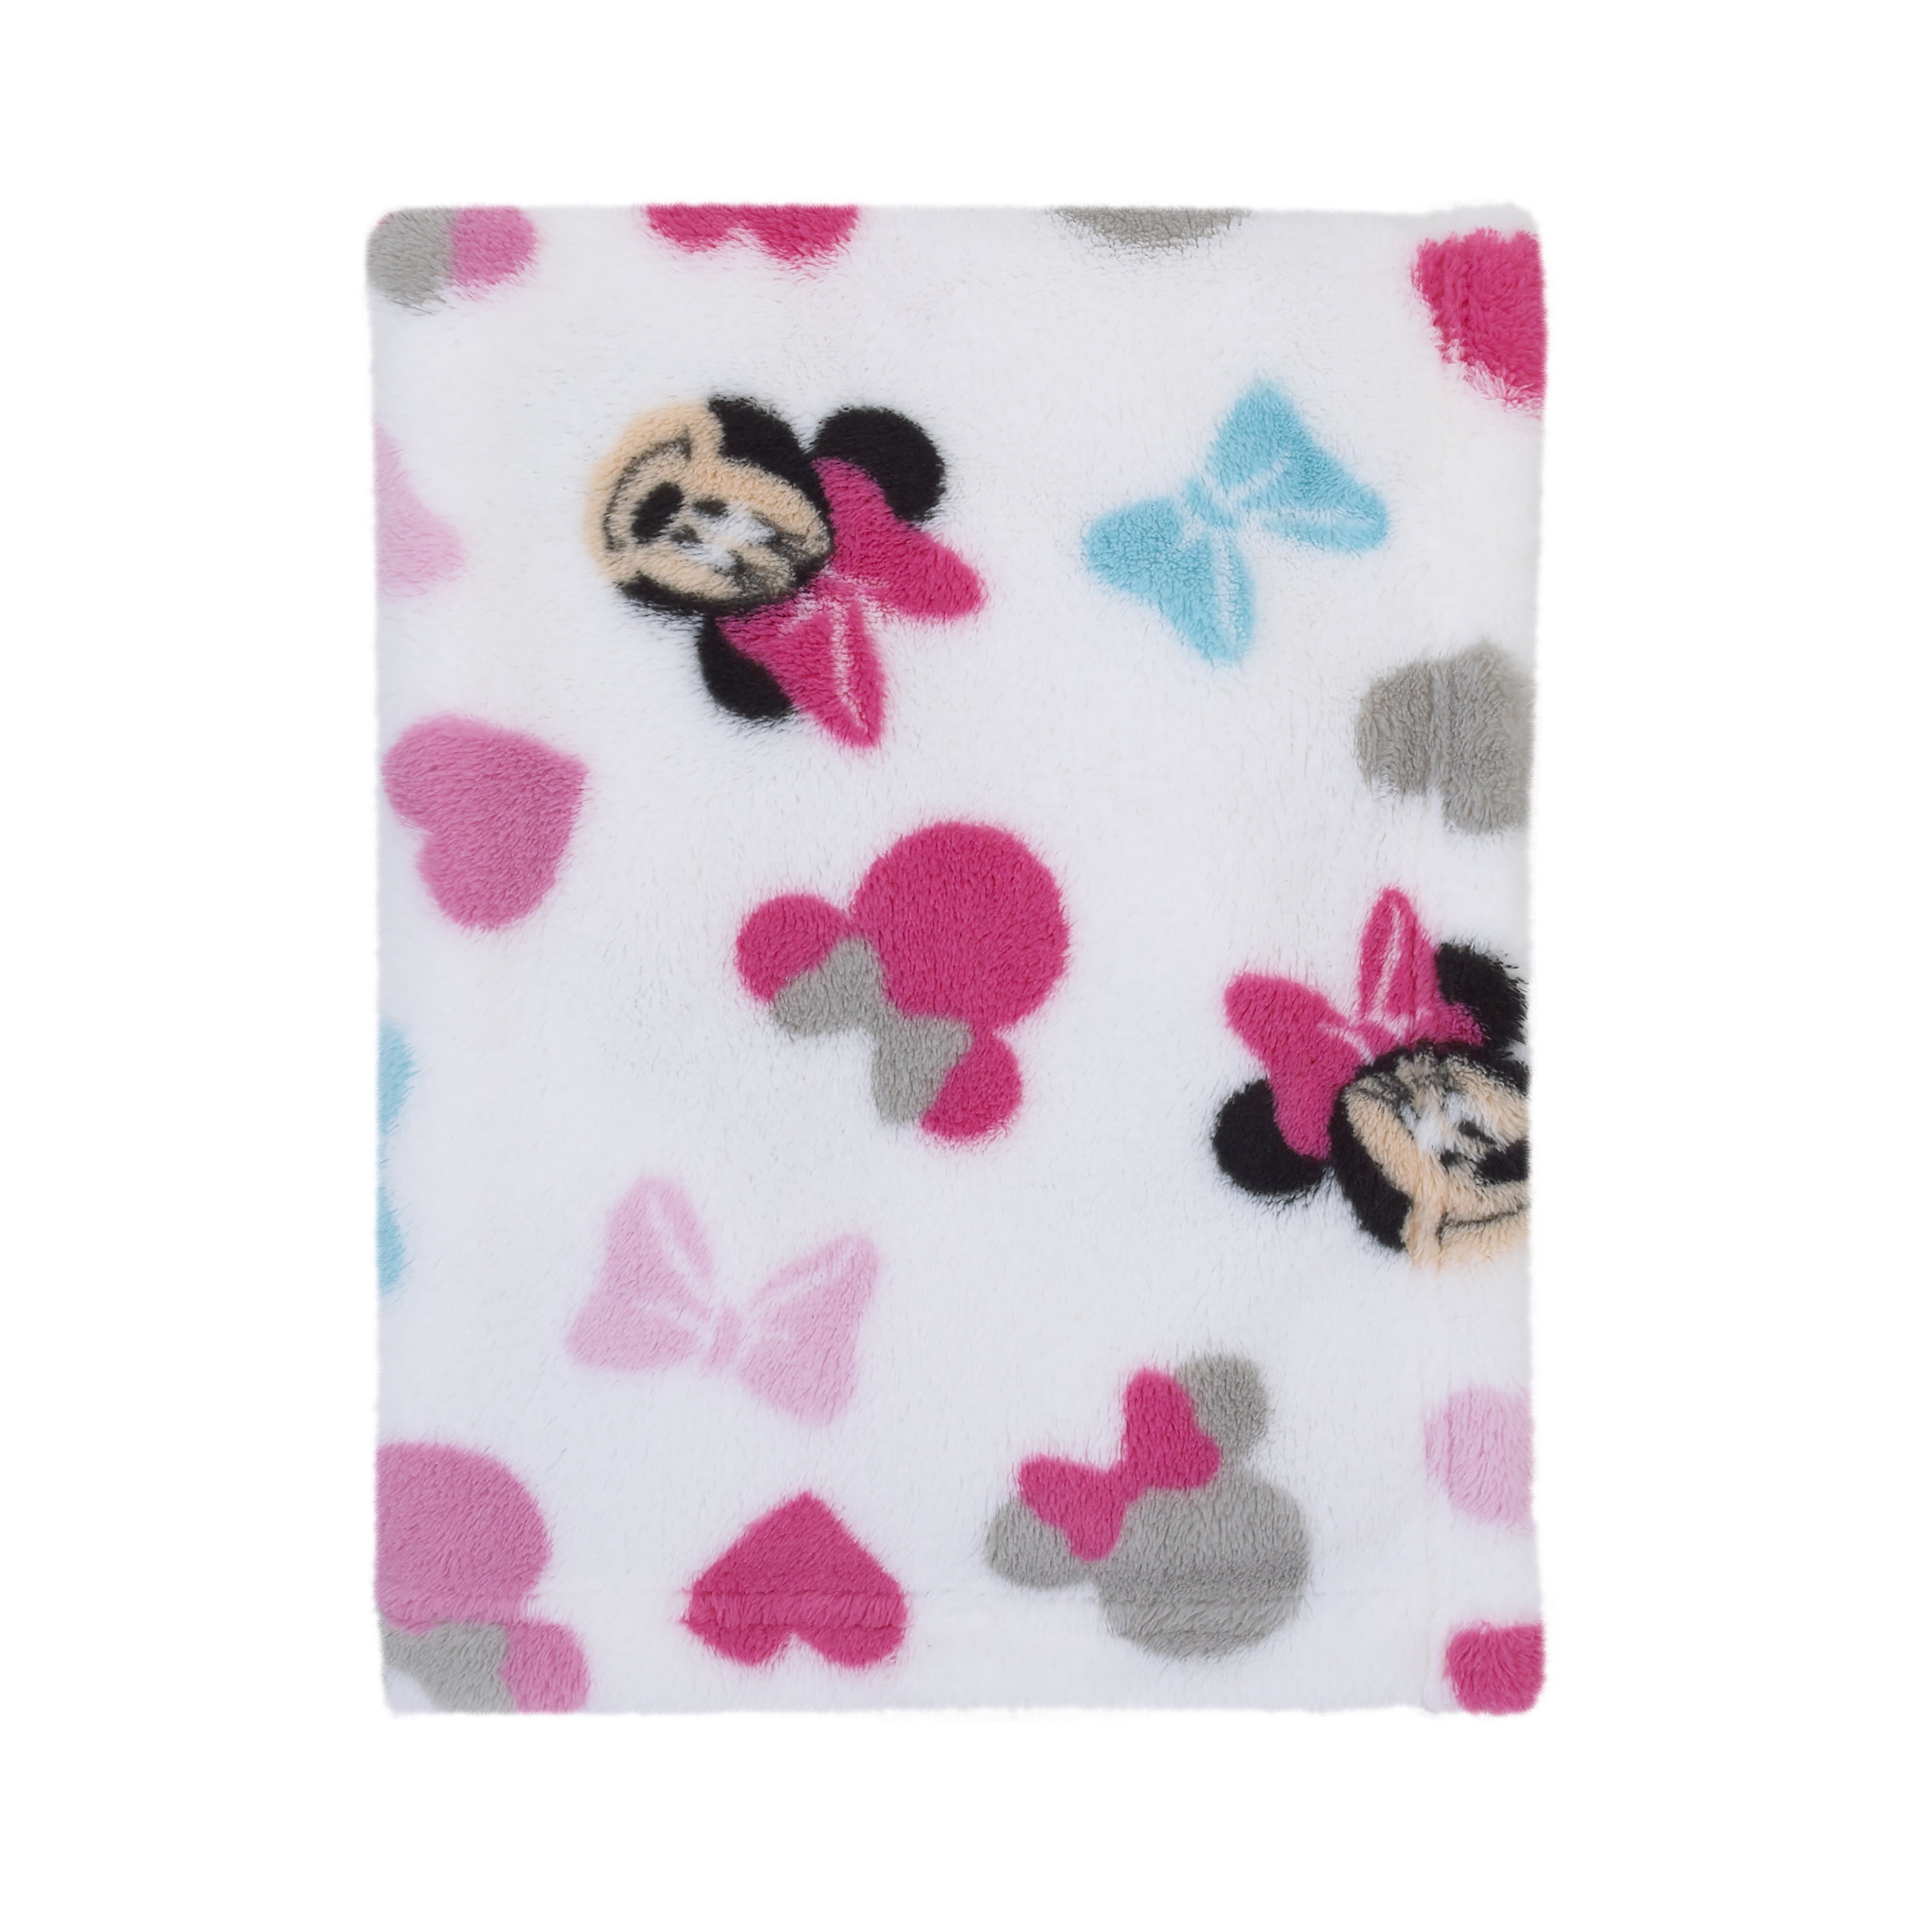 Disney Minnie Mouse Baby Girls Newborn Soft Fleece Blanket Pink 75x100cm 